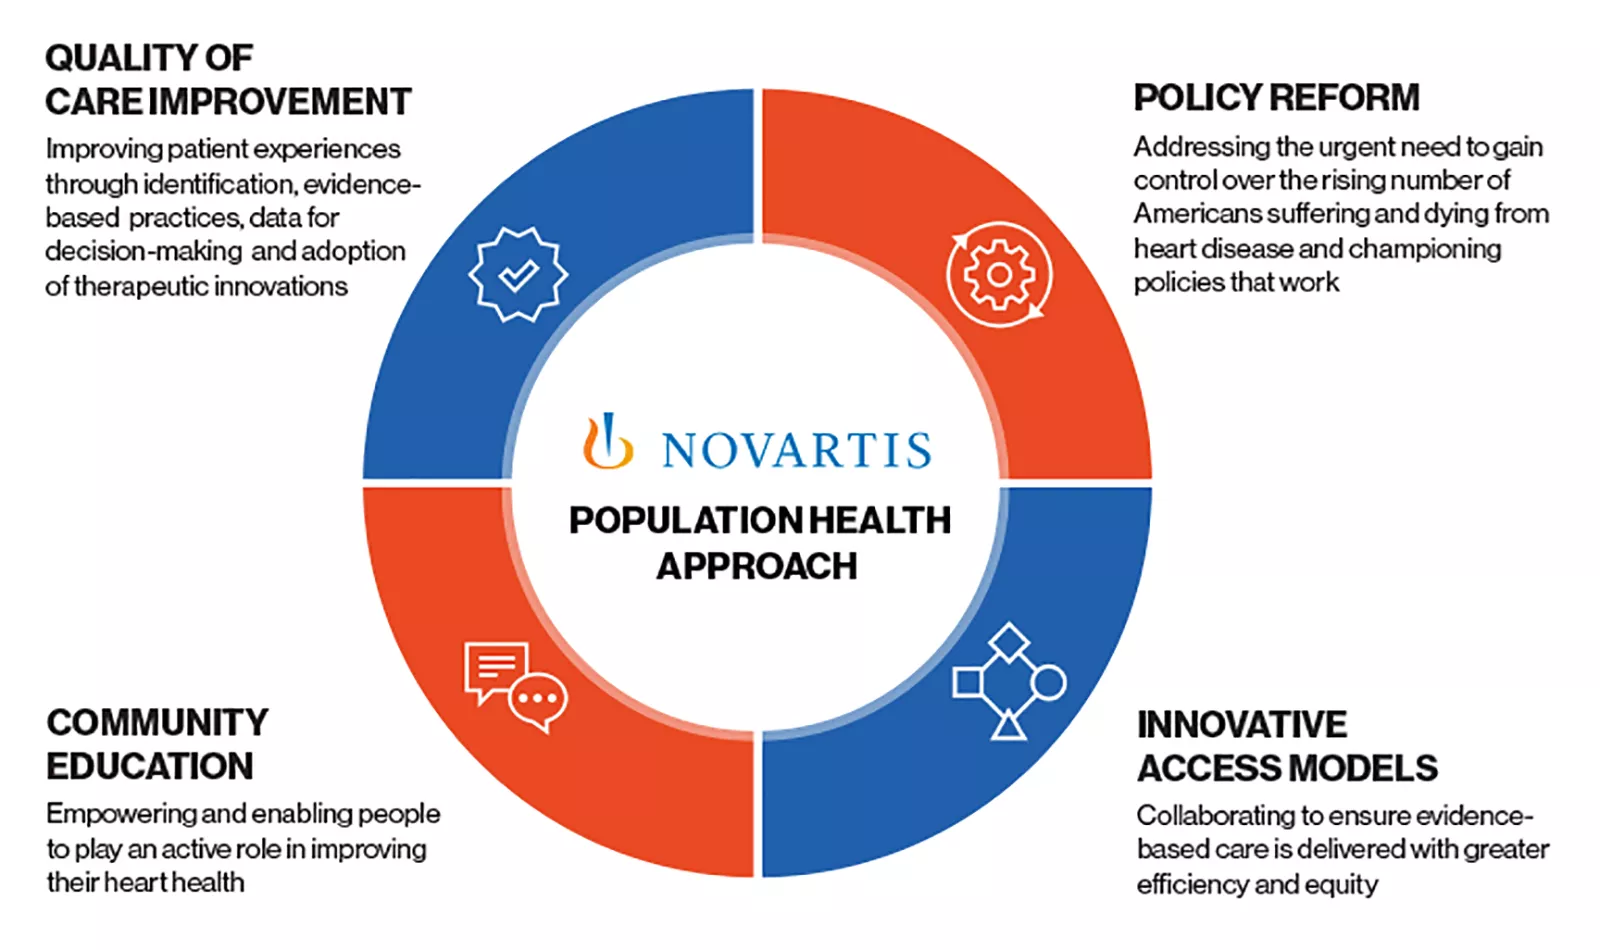 Novartis population health approach